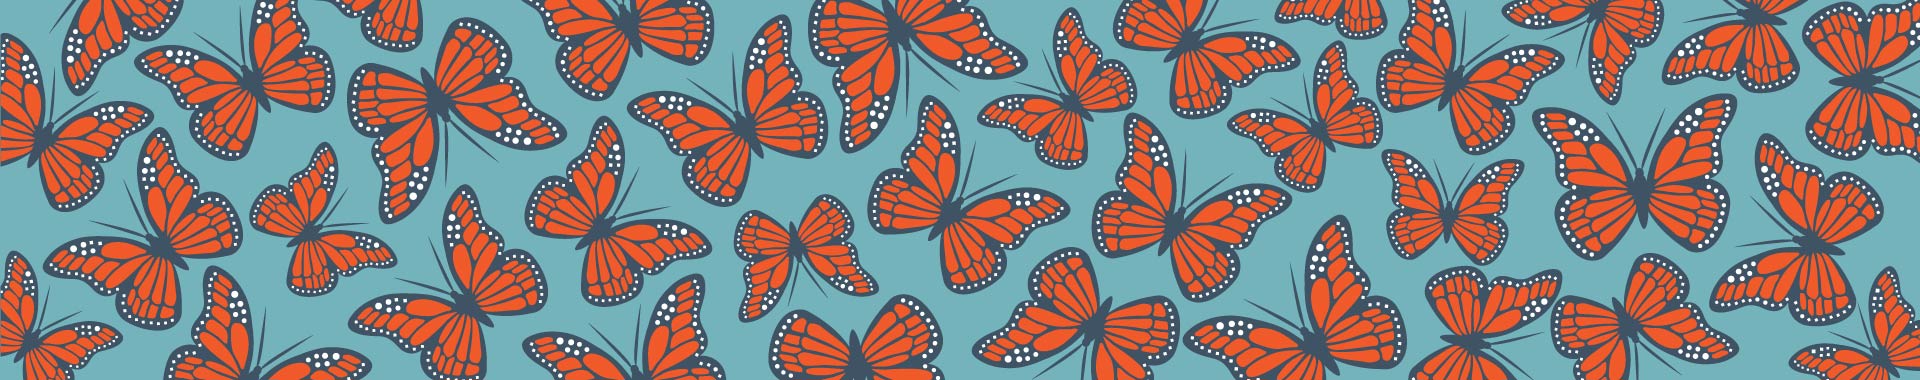 banner image of monarch butterflies 